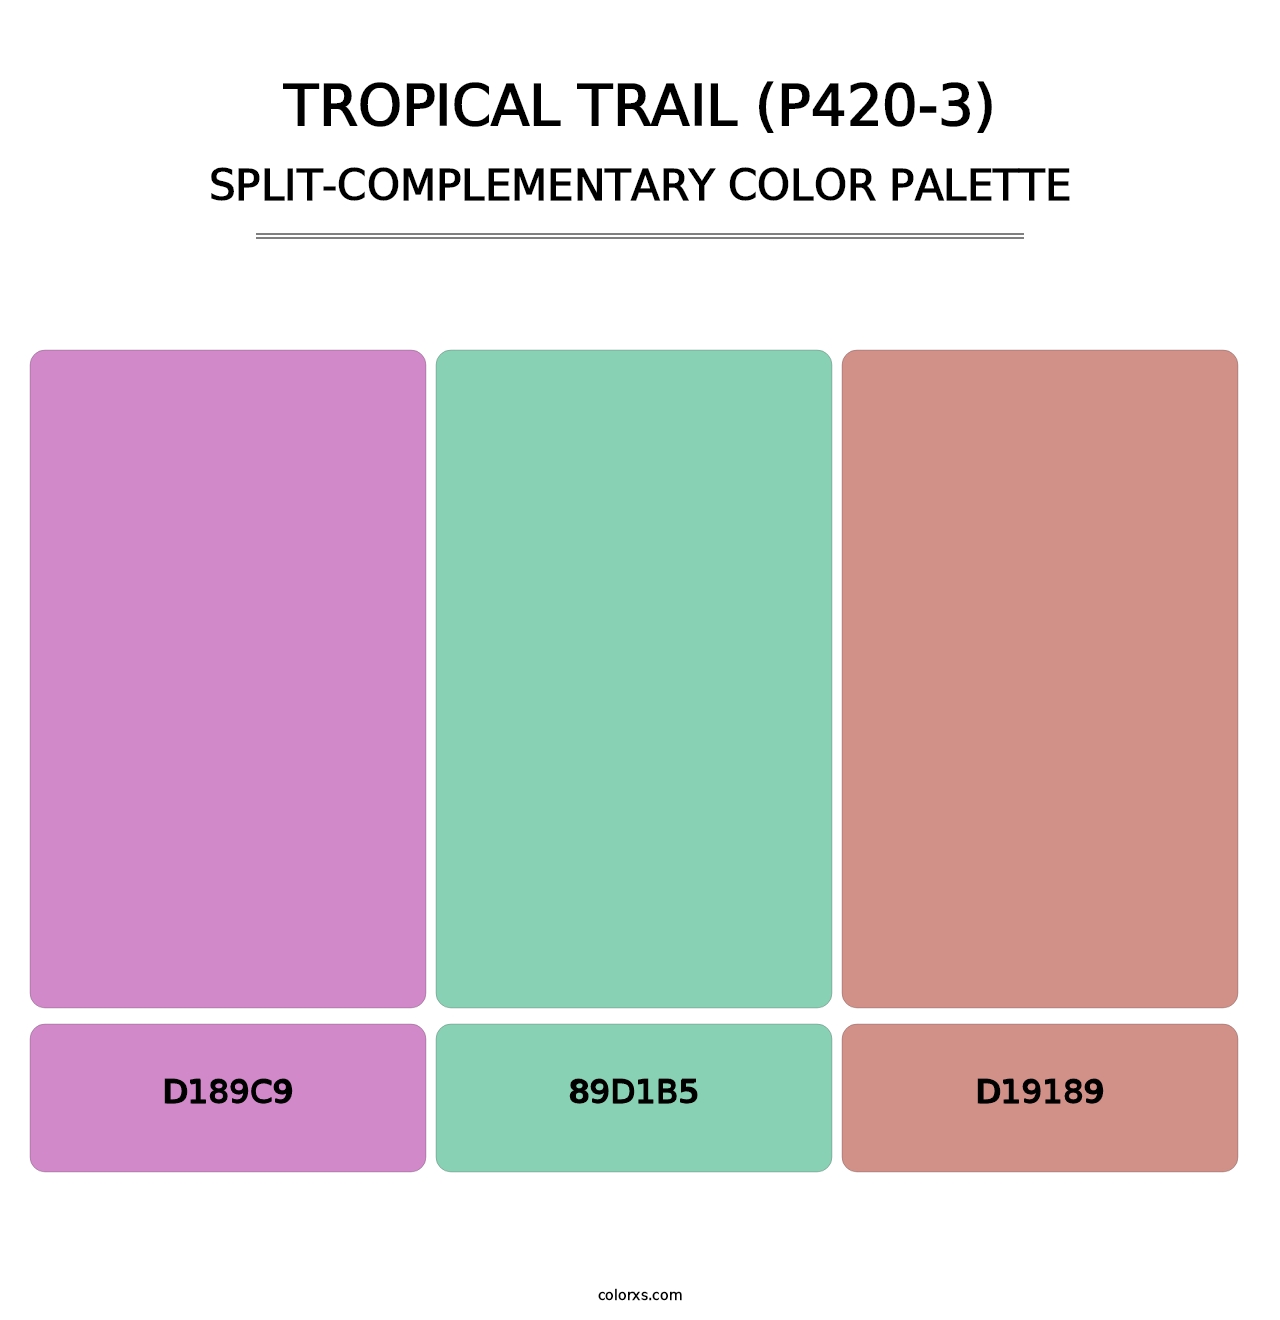 Tropical Trail (P420-3) - Split-Complementary Color Palette